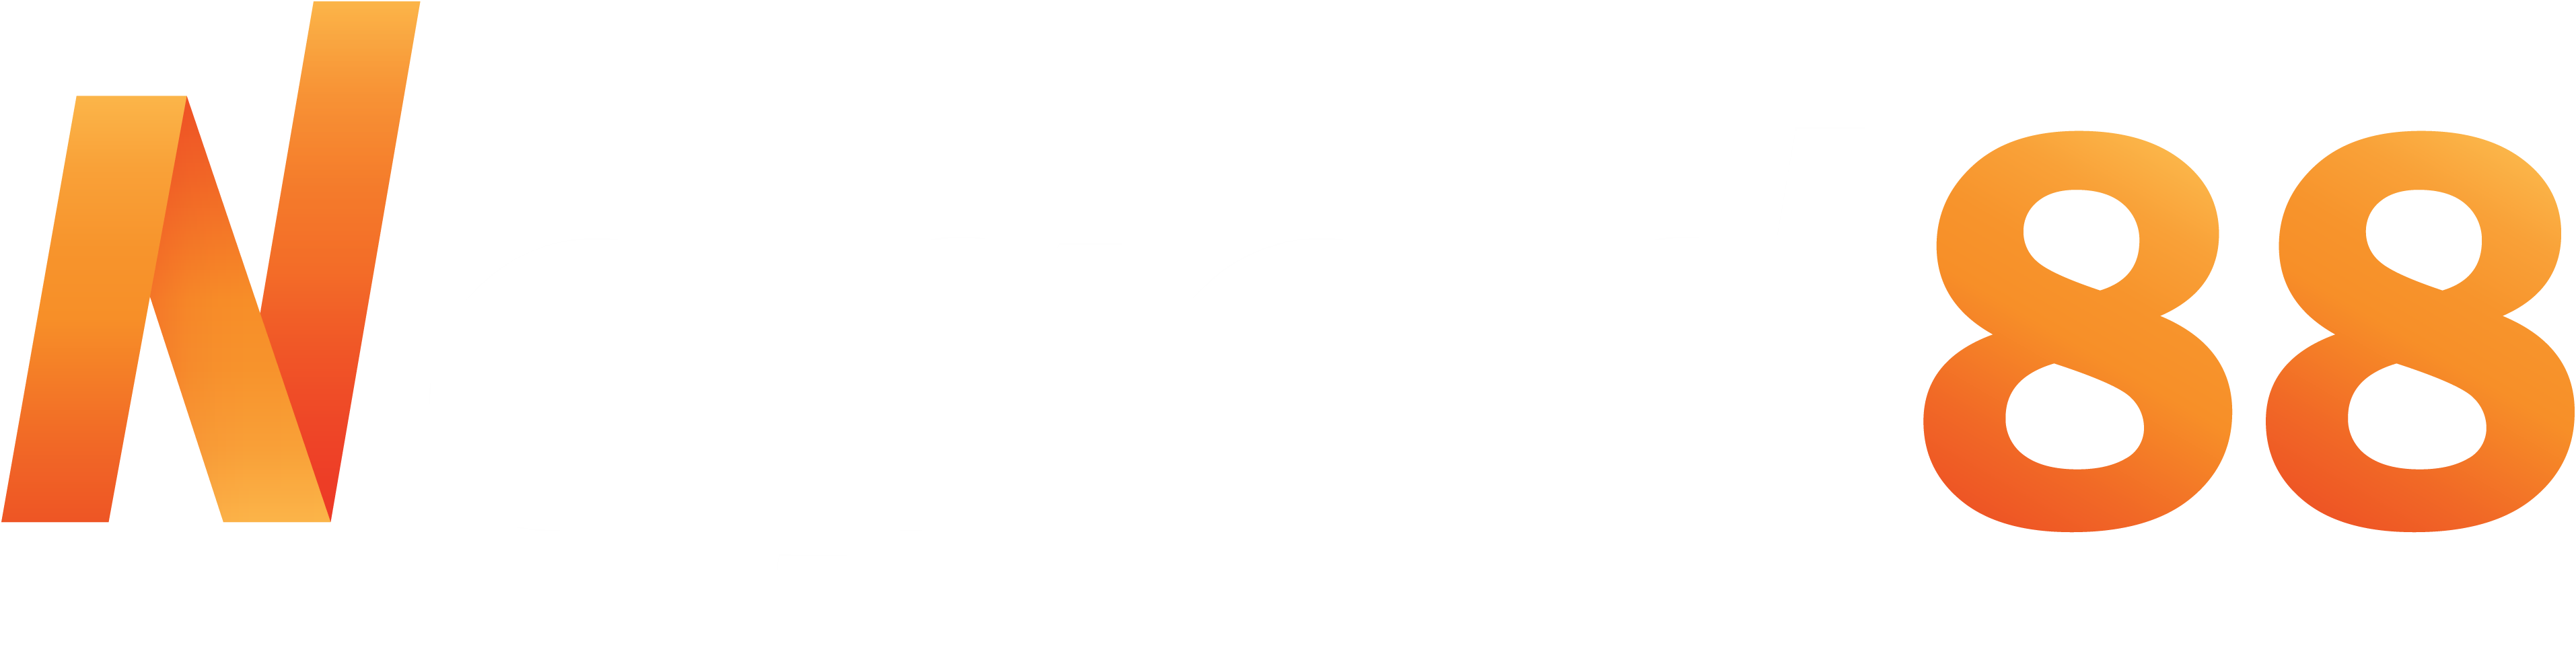 Nagad88 logo